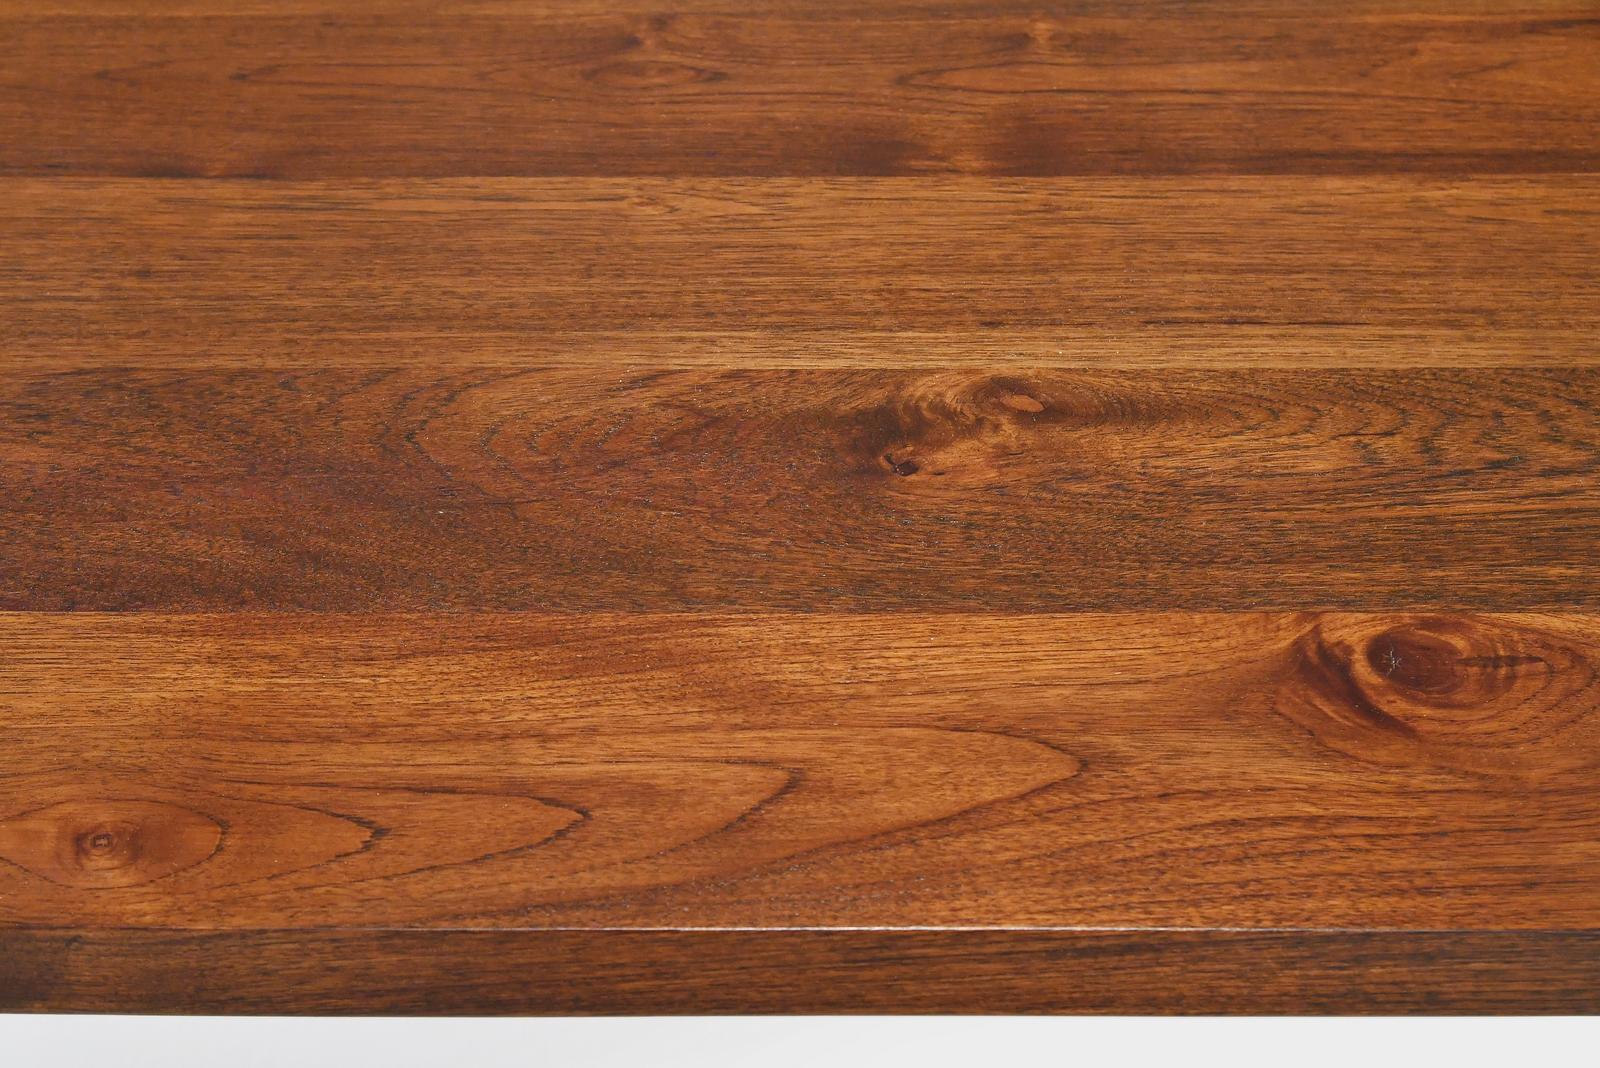 Bespoke Table, Reclaimed Teak wood, Sand cast Aluminum Bases by P. Tendercool For Sale 1